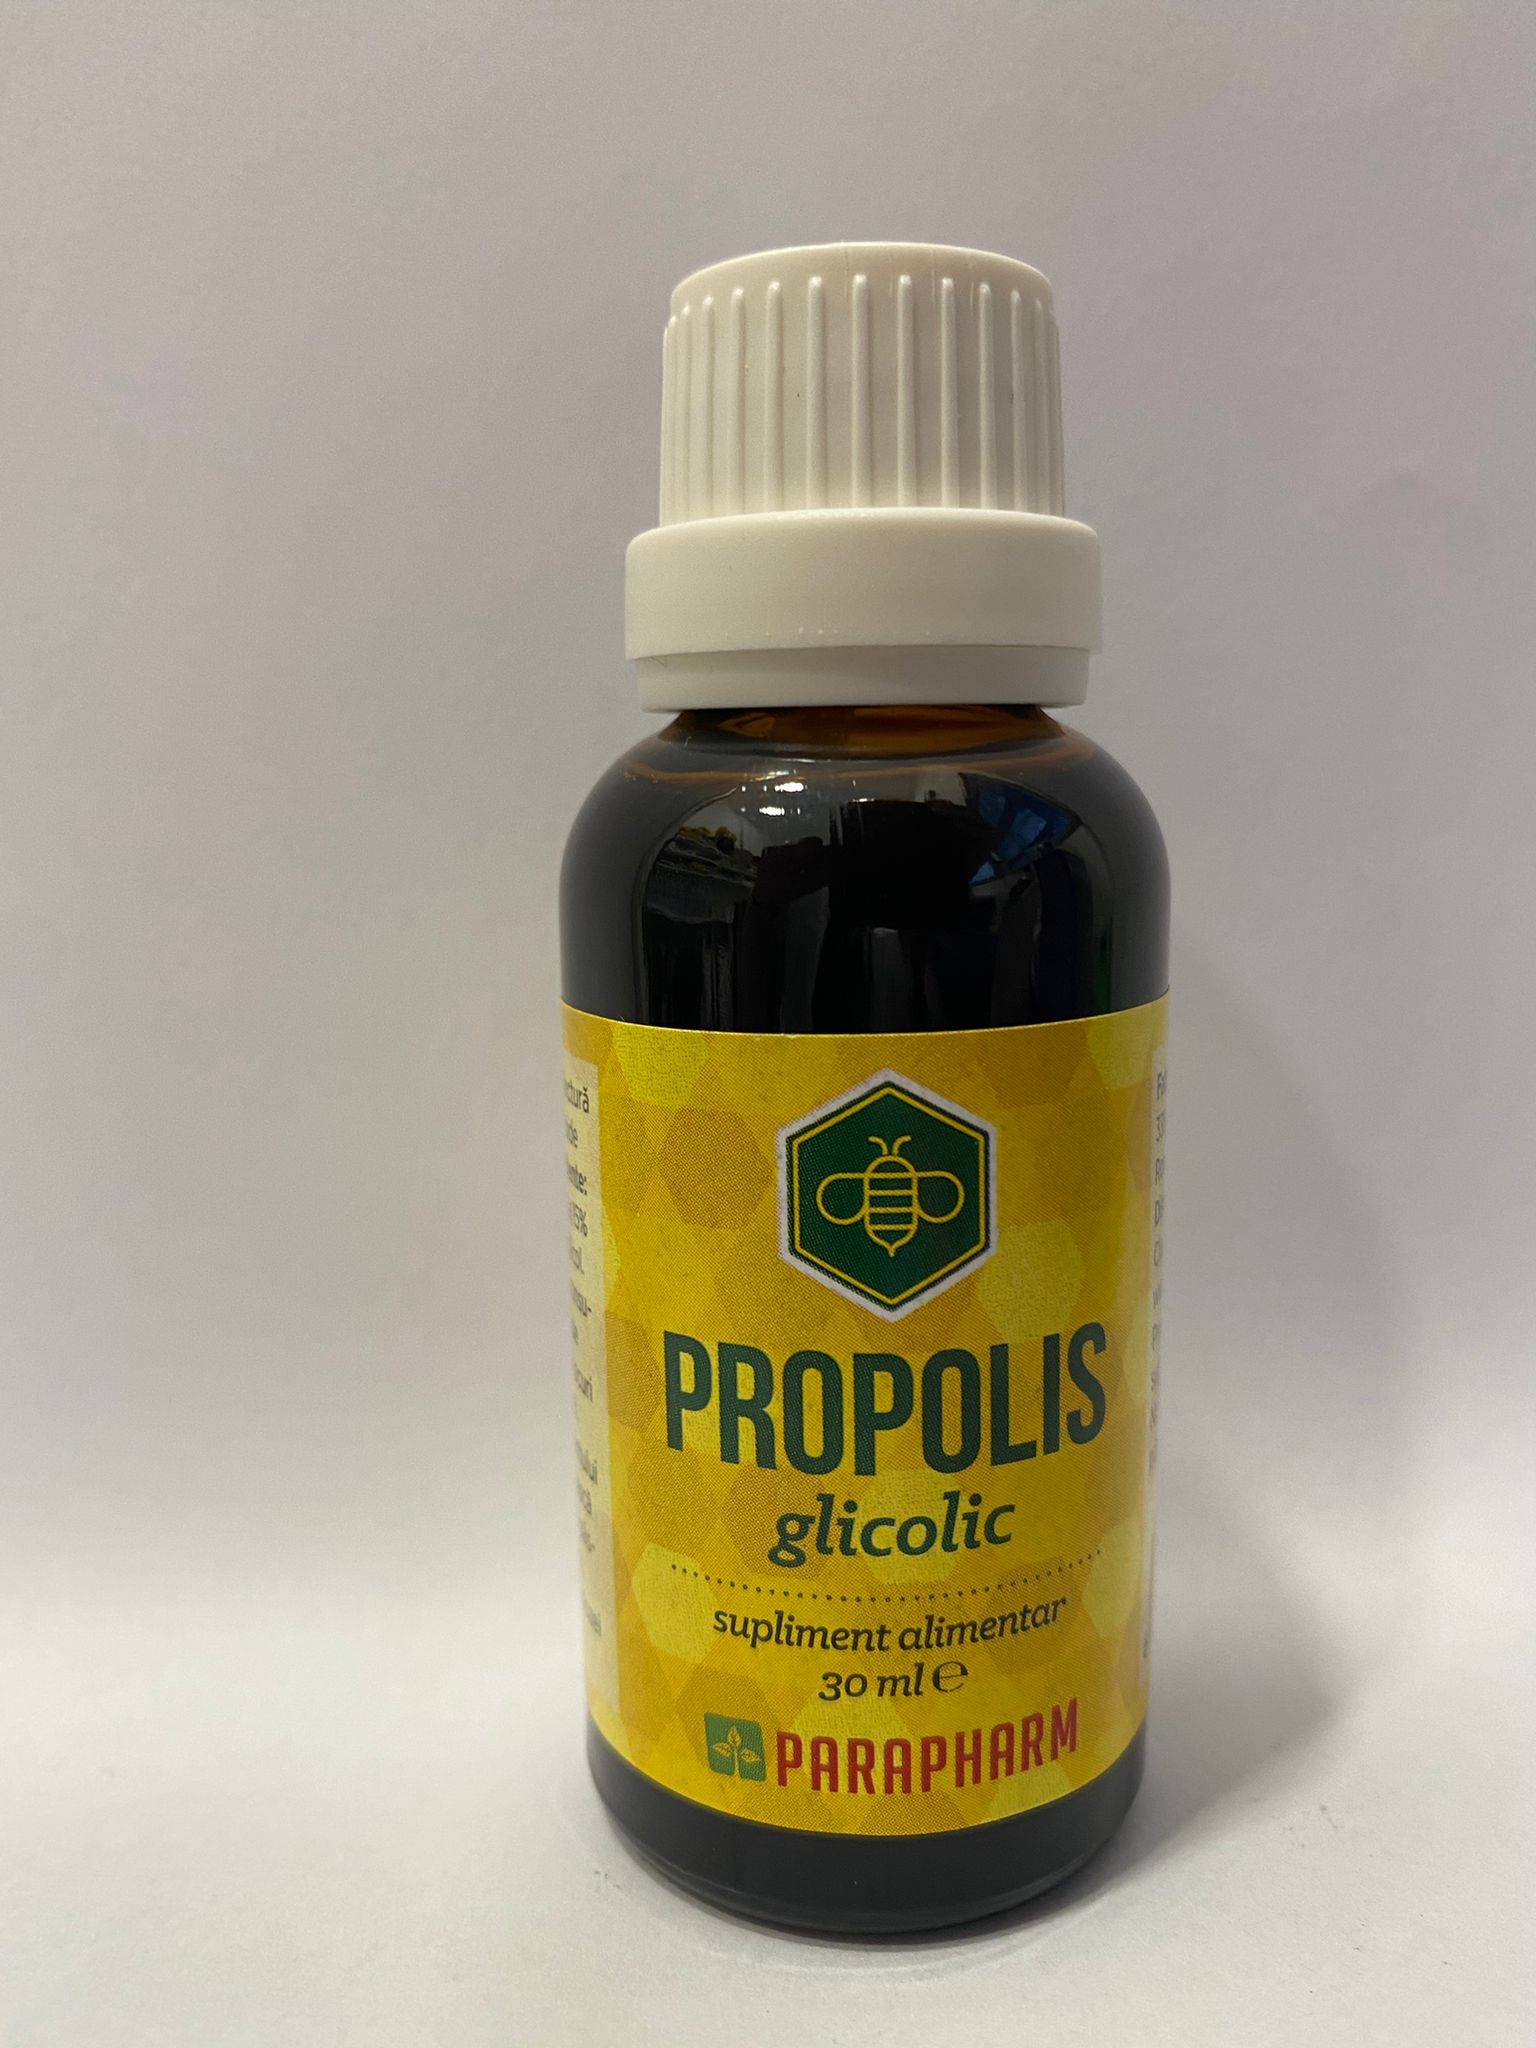 Propolis glicol fara alcool, 30ml - parapharm